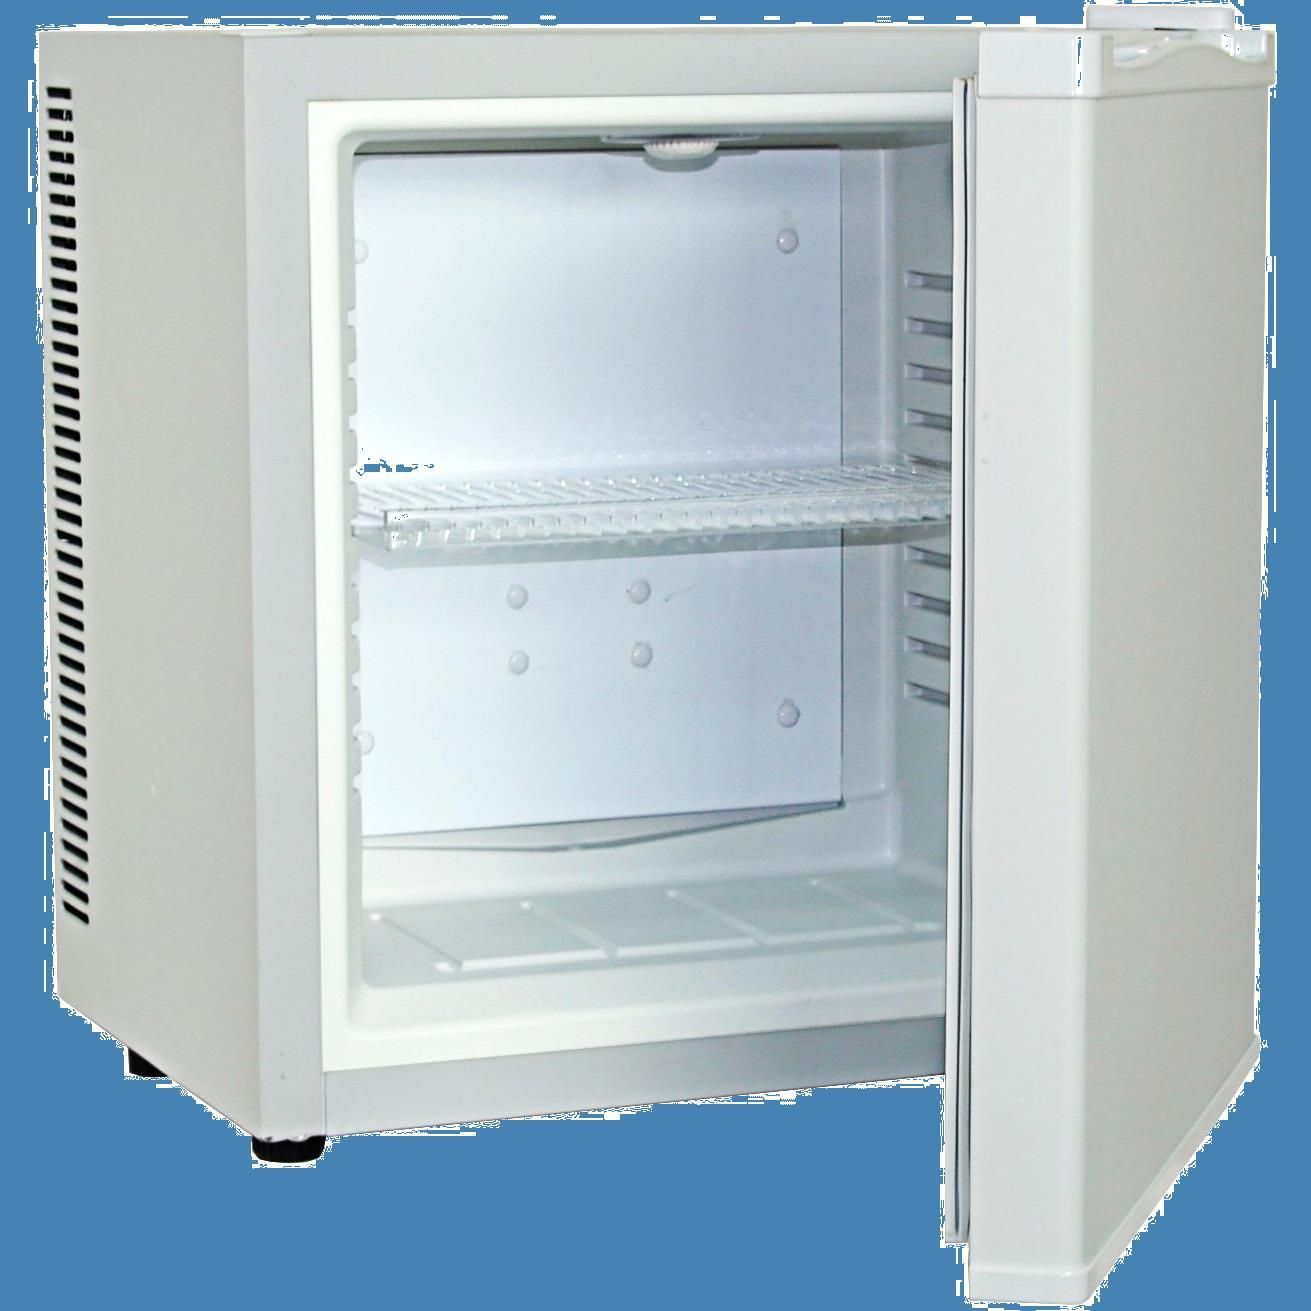 SunRuck サンルック 無音 無振動 1ドア電子冷蔵庫 冷庫さんcute 20L ノンフロン ペルチェ方式 右開き ミニ冷蔵庫 